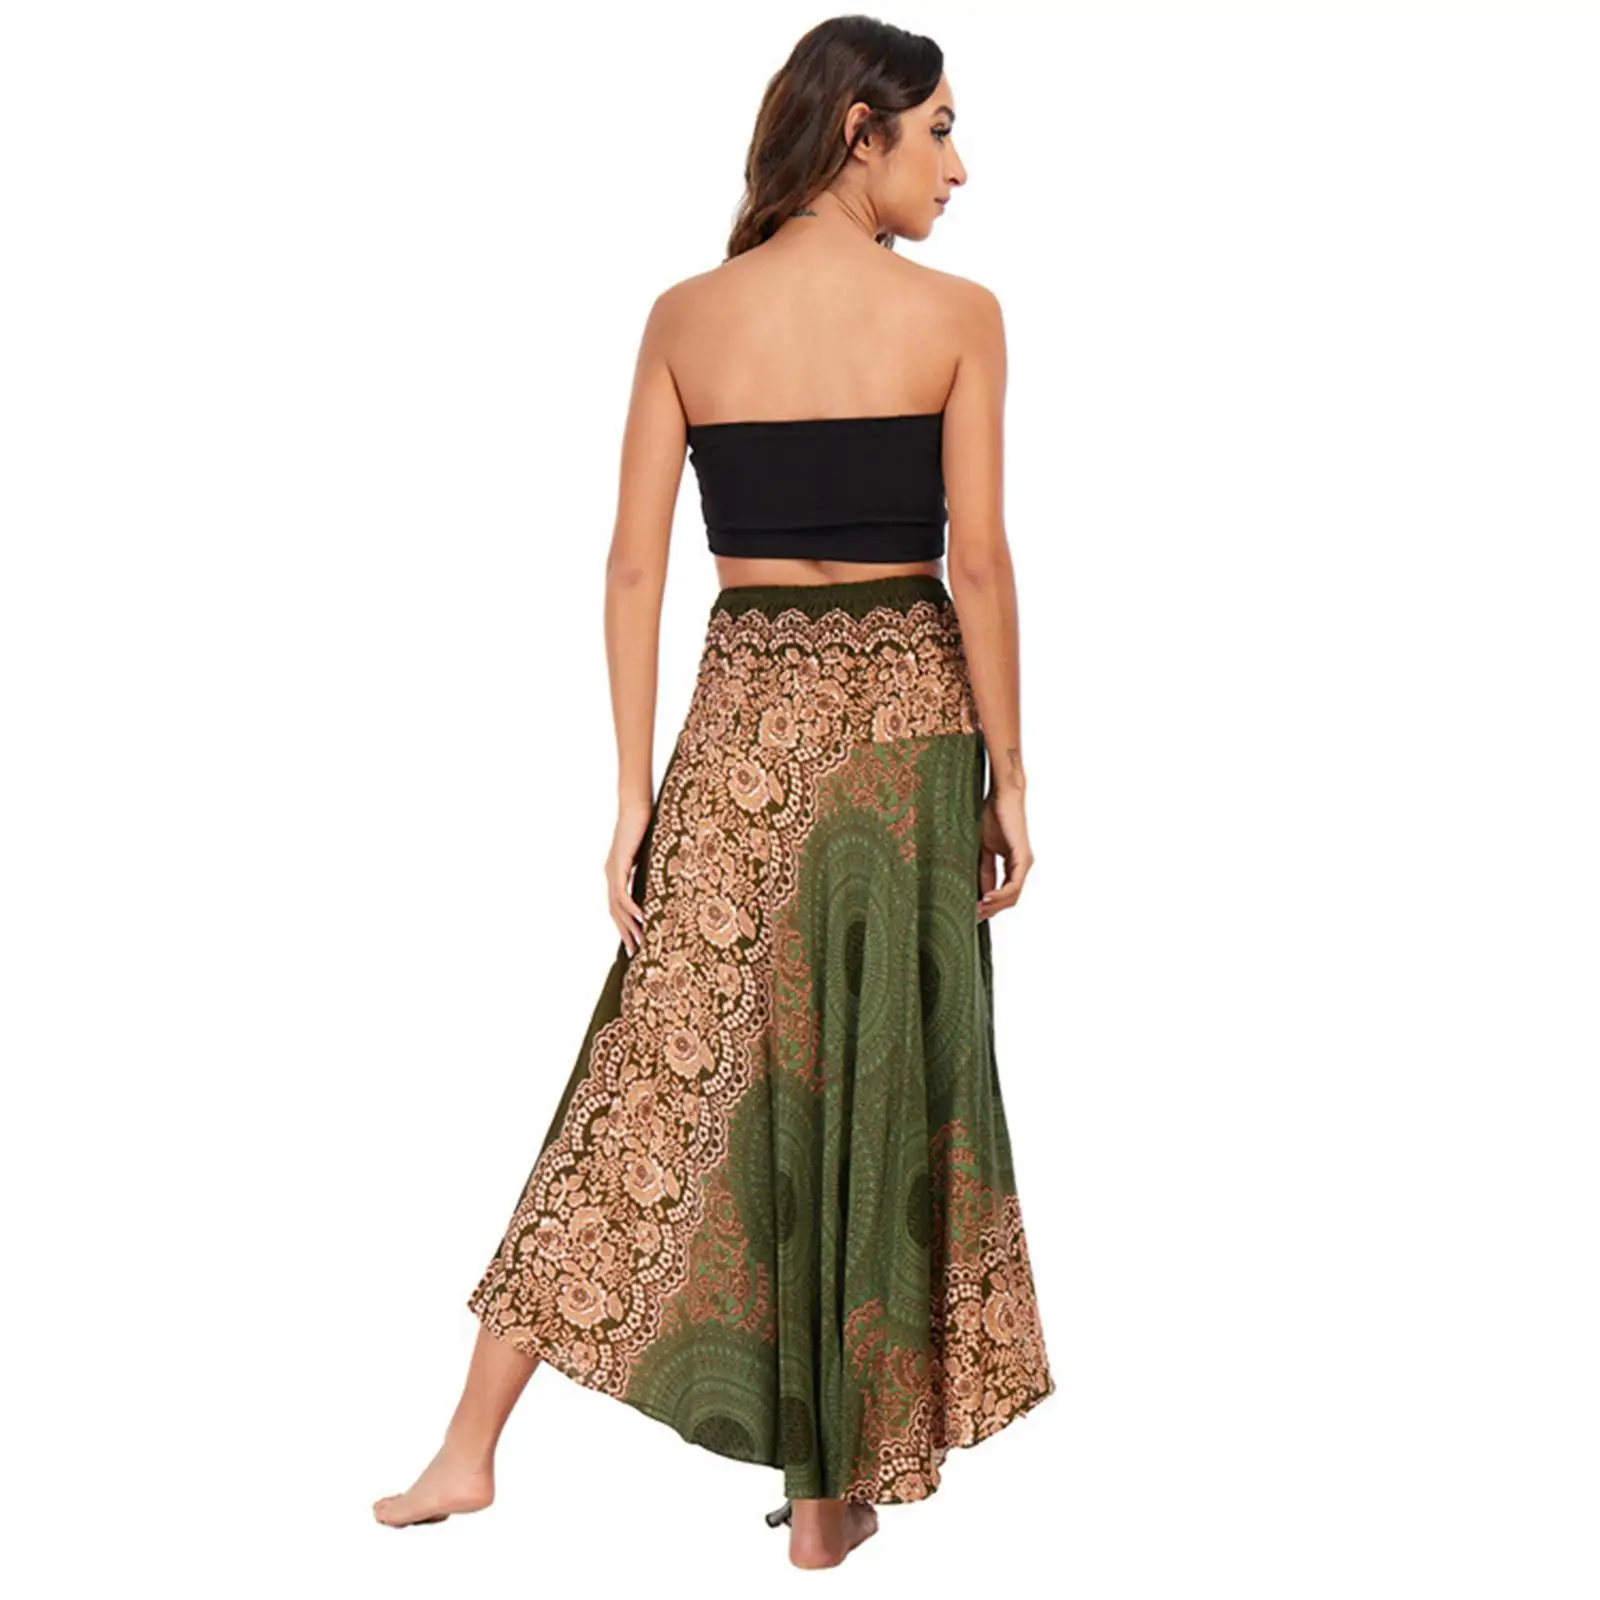 Boho Maxi Skirt Costume Clothing High Waisted Gypsy for Women Dance Ladies Cha Cha